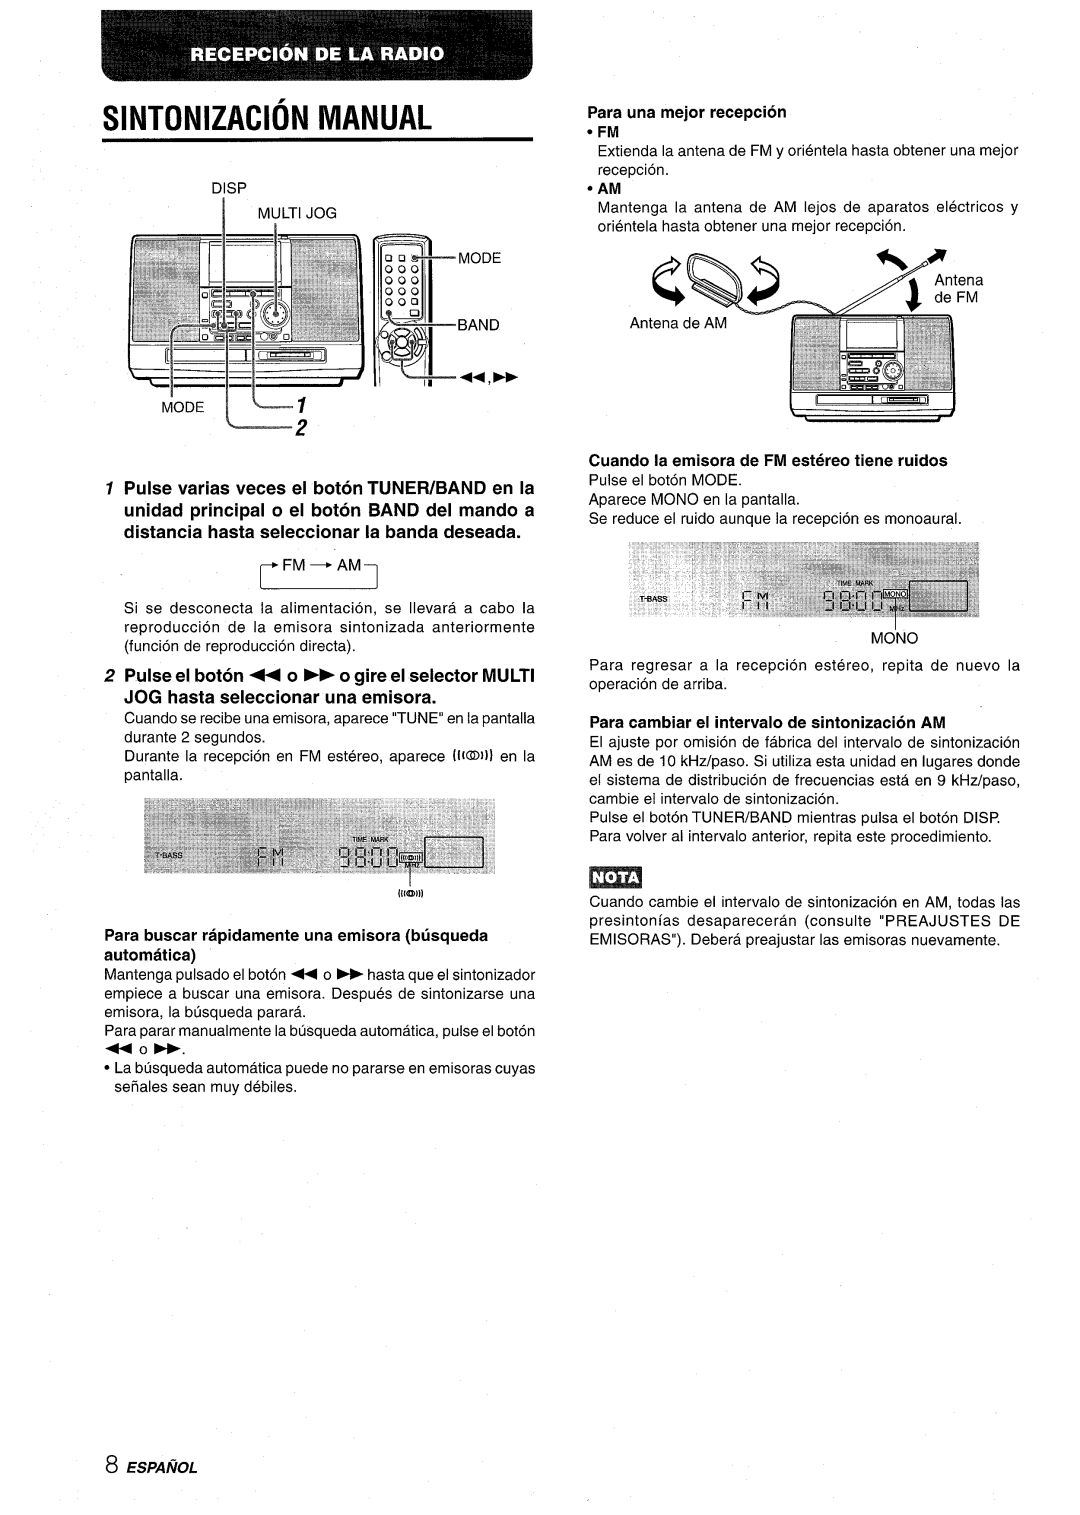 Aiwa CSD-MD50 manual Sintonizacion Manual, Para buscar rapidamente una emisora busqueda, automat, Espanol 